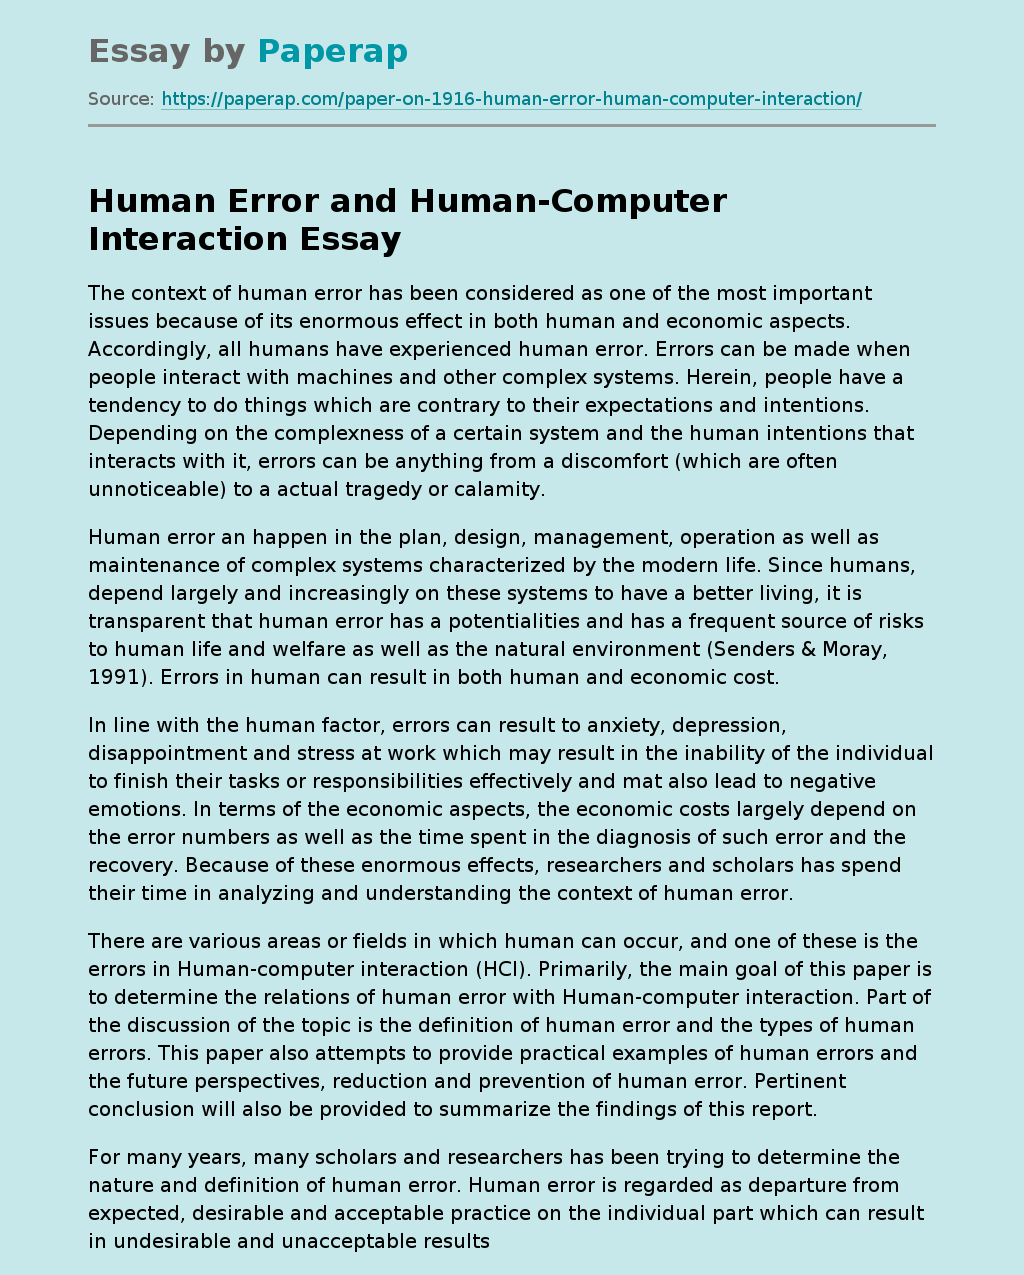 Human Error and Human-Computer Interaction